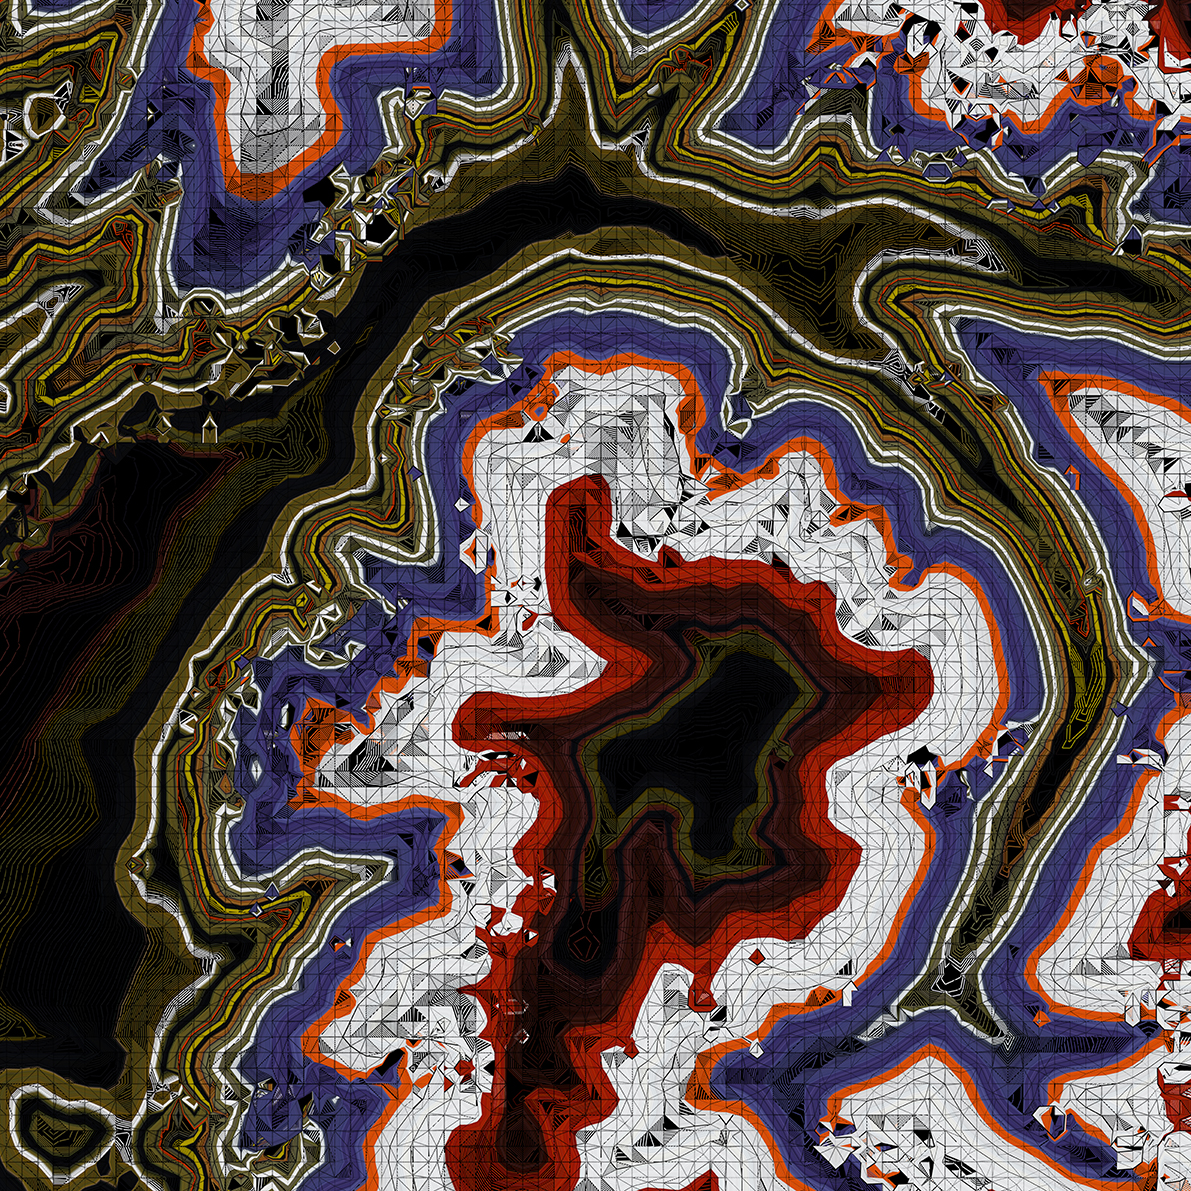 Stratum#33 “Gemstone of Wassily Kandinsky” @foundation 

Kandinsky's shapes, colors, and compositions.
The algorithmic topography, time, and landscape.

foundation.app/collection/tsc…
#Generative #NFT #art #modernart #Rhino7 #Grasshopper mtbrs.net/ps_kairostsg_S…